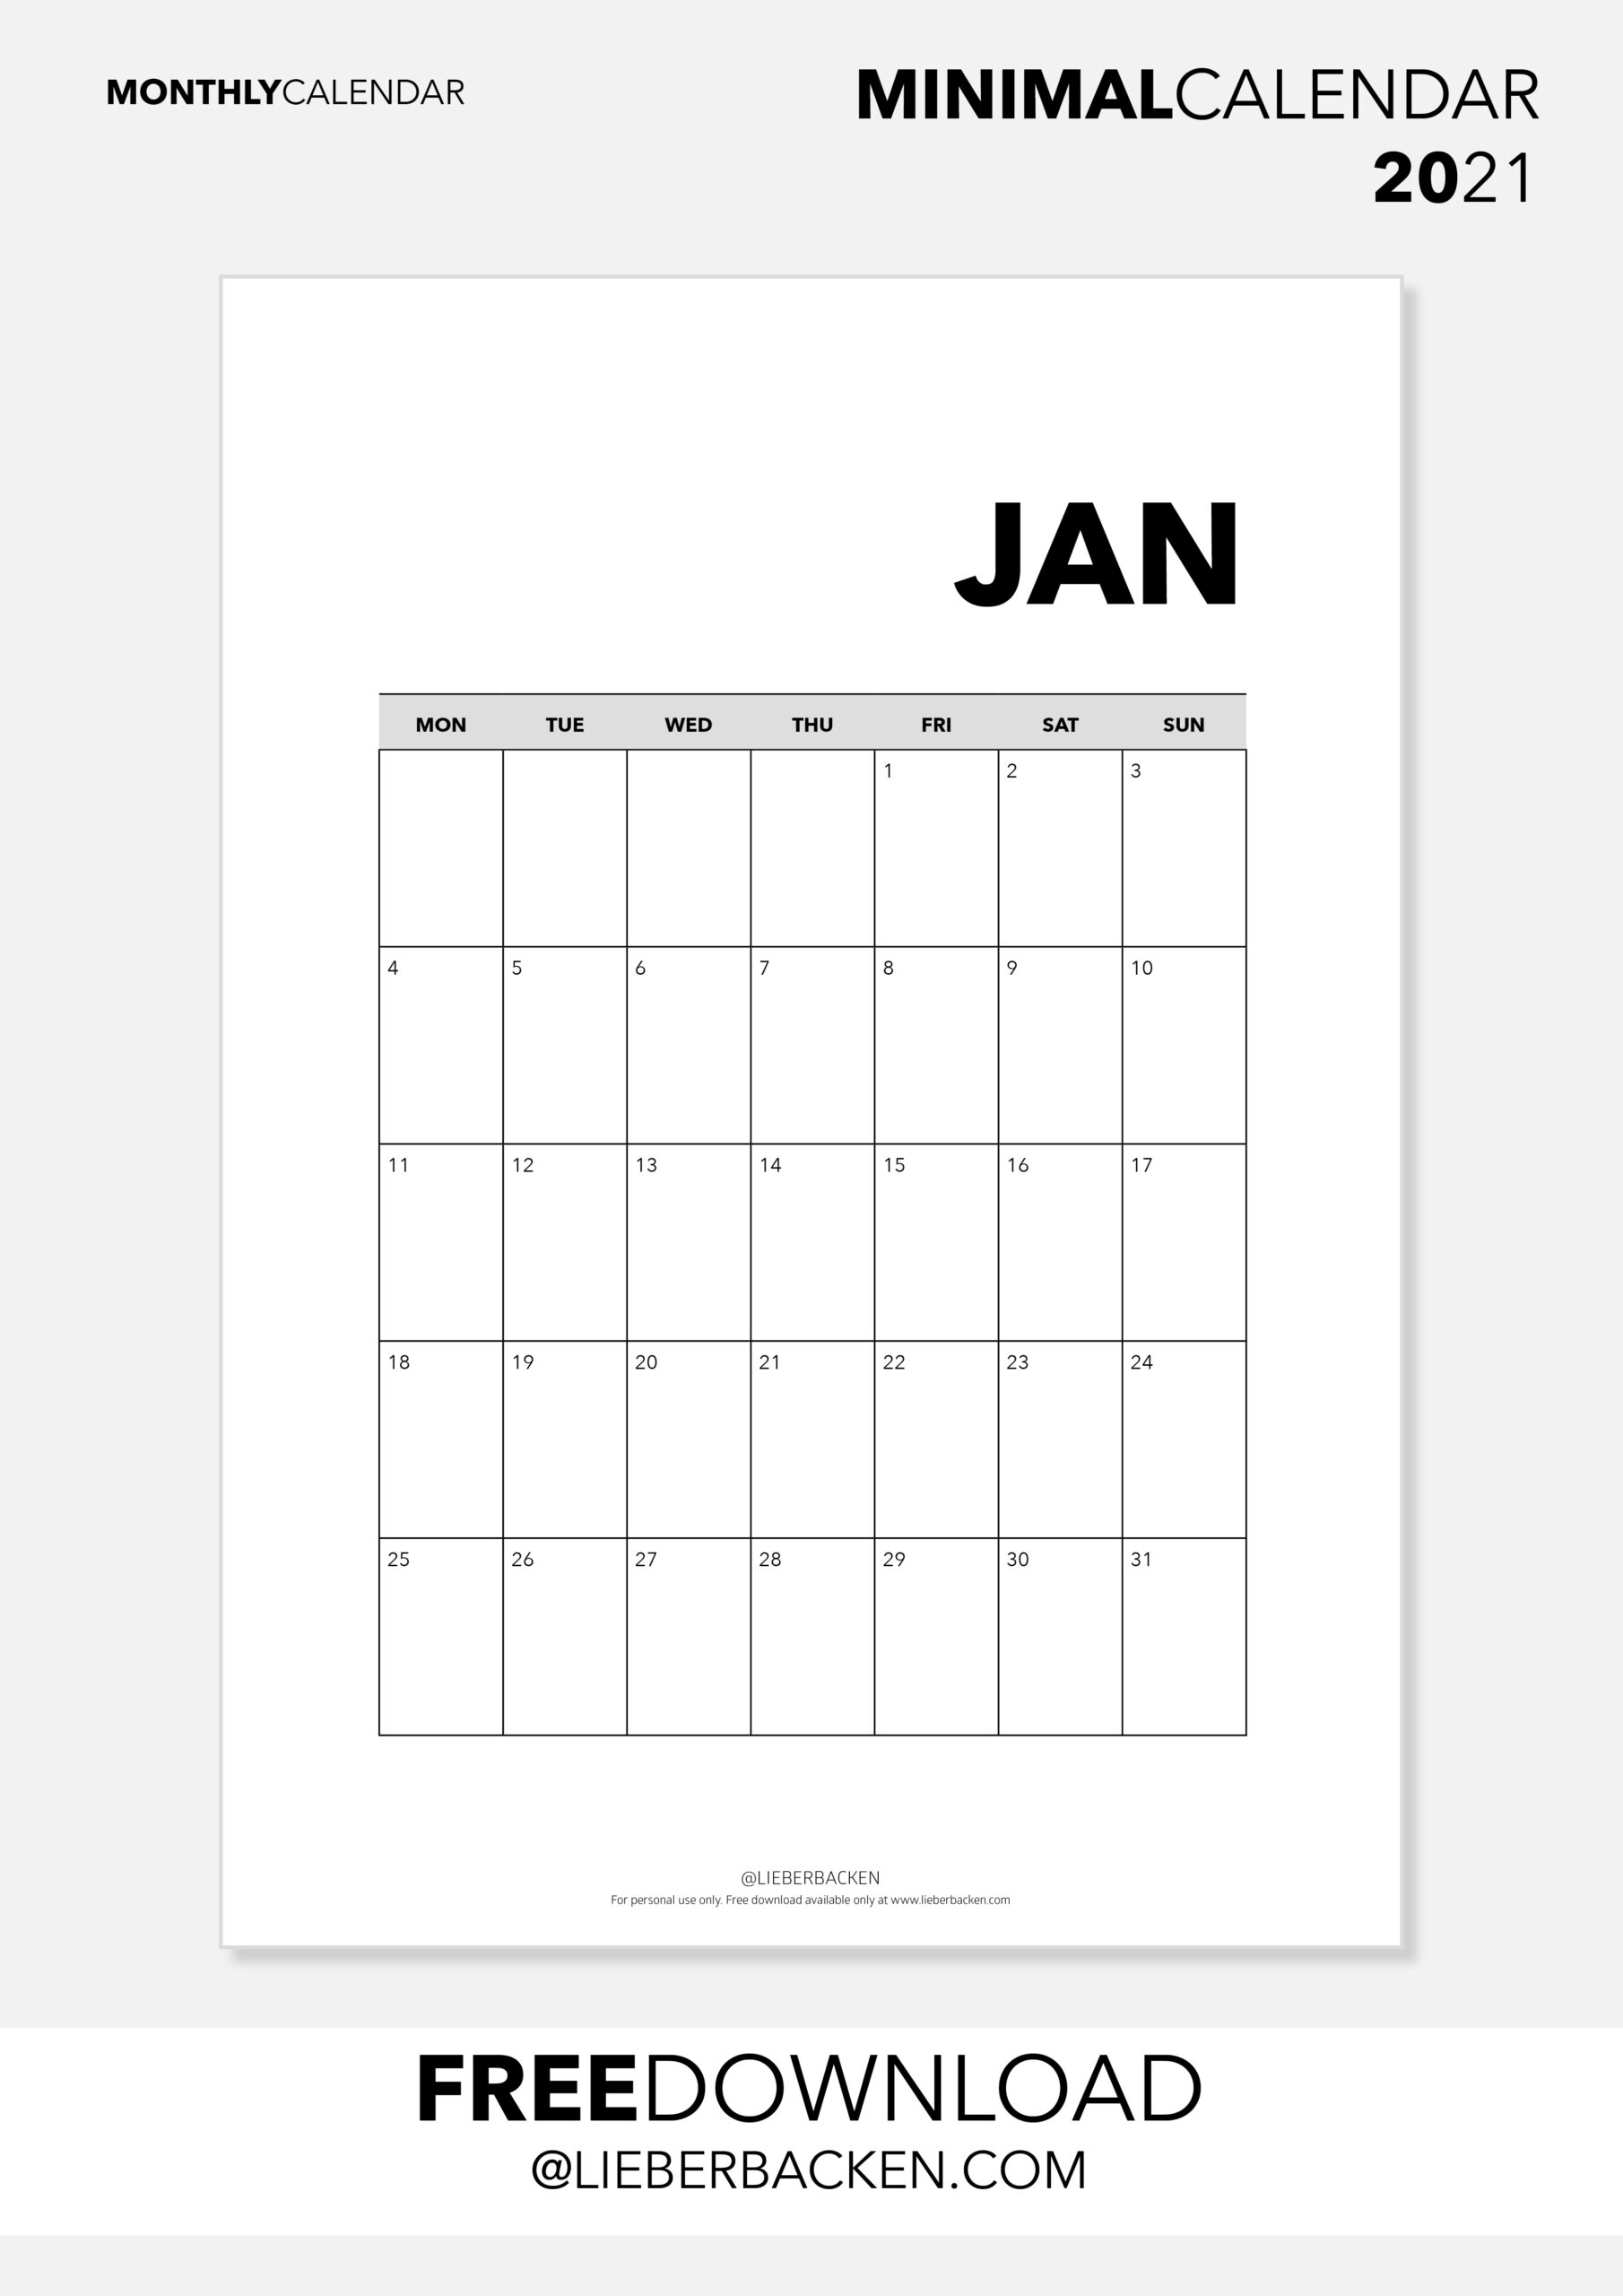 Minimal Calendar 2021 | Monthly Calendar 2021 | Free Download | Kostenloser Download